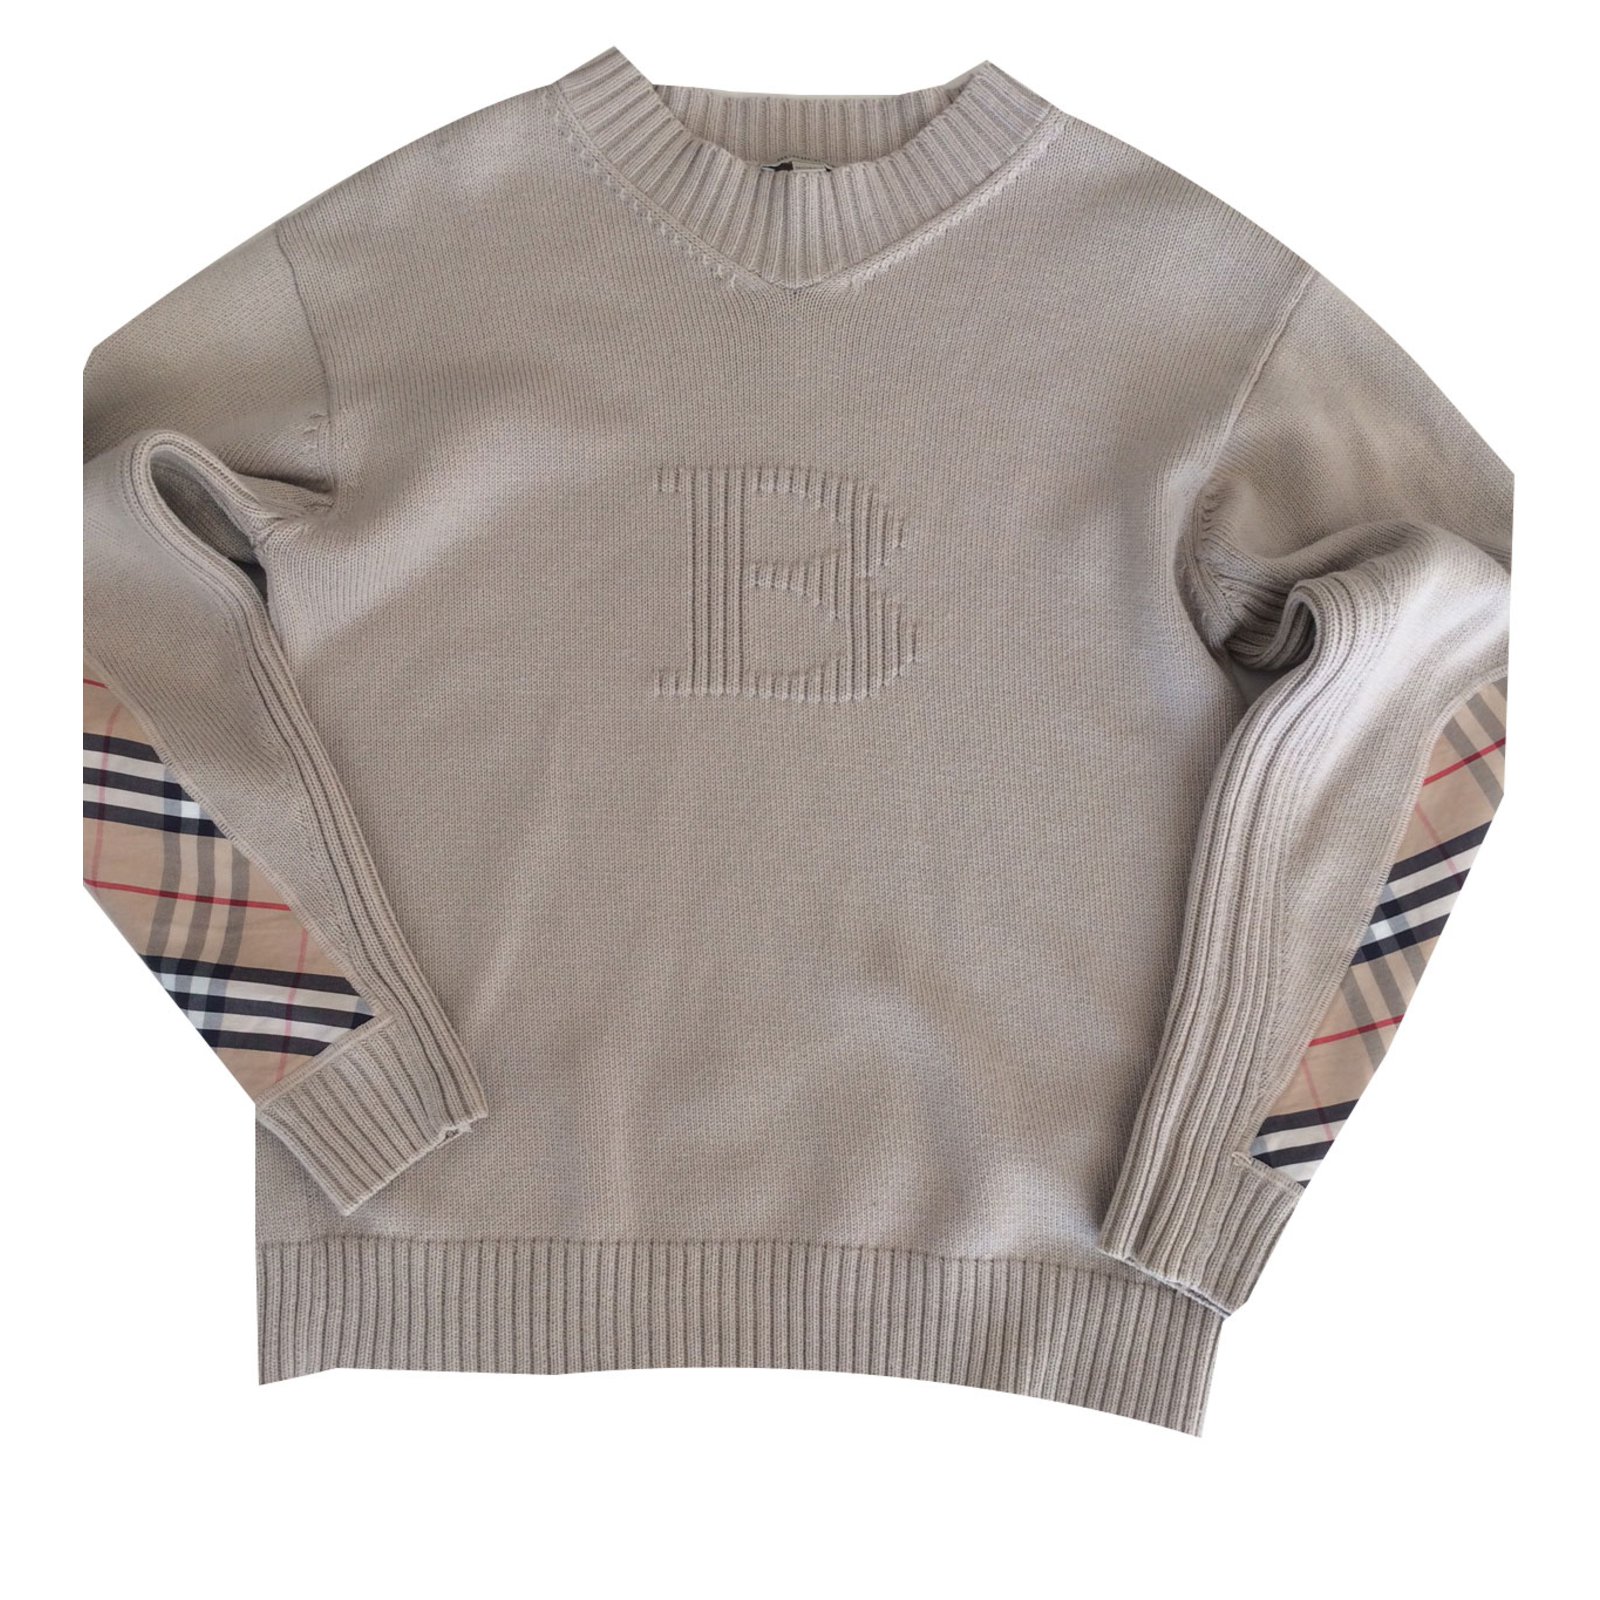 burberry sweater 2018